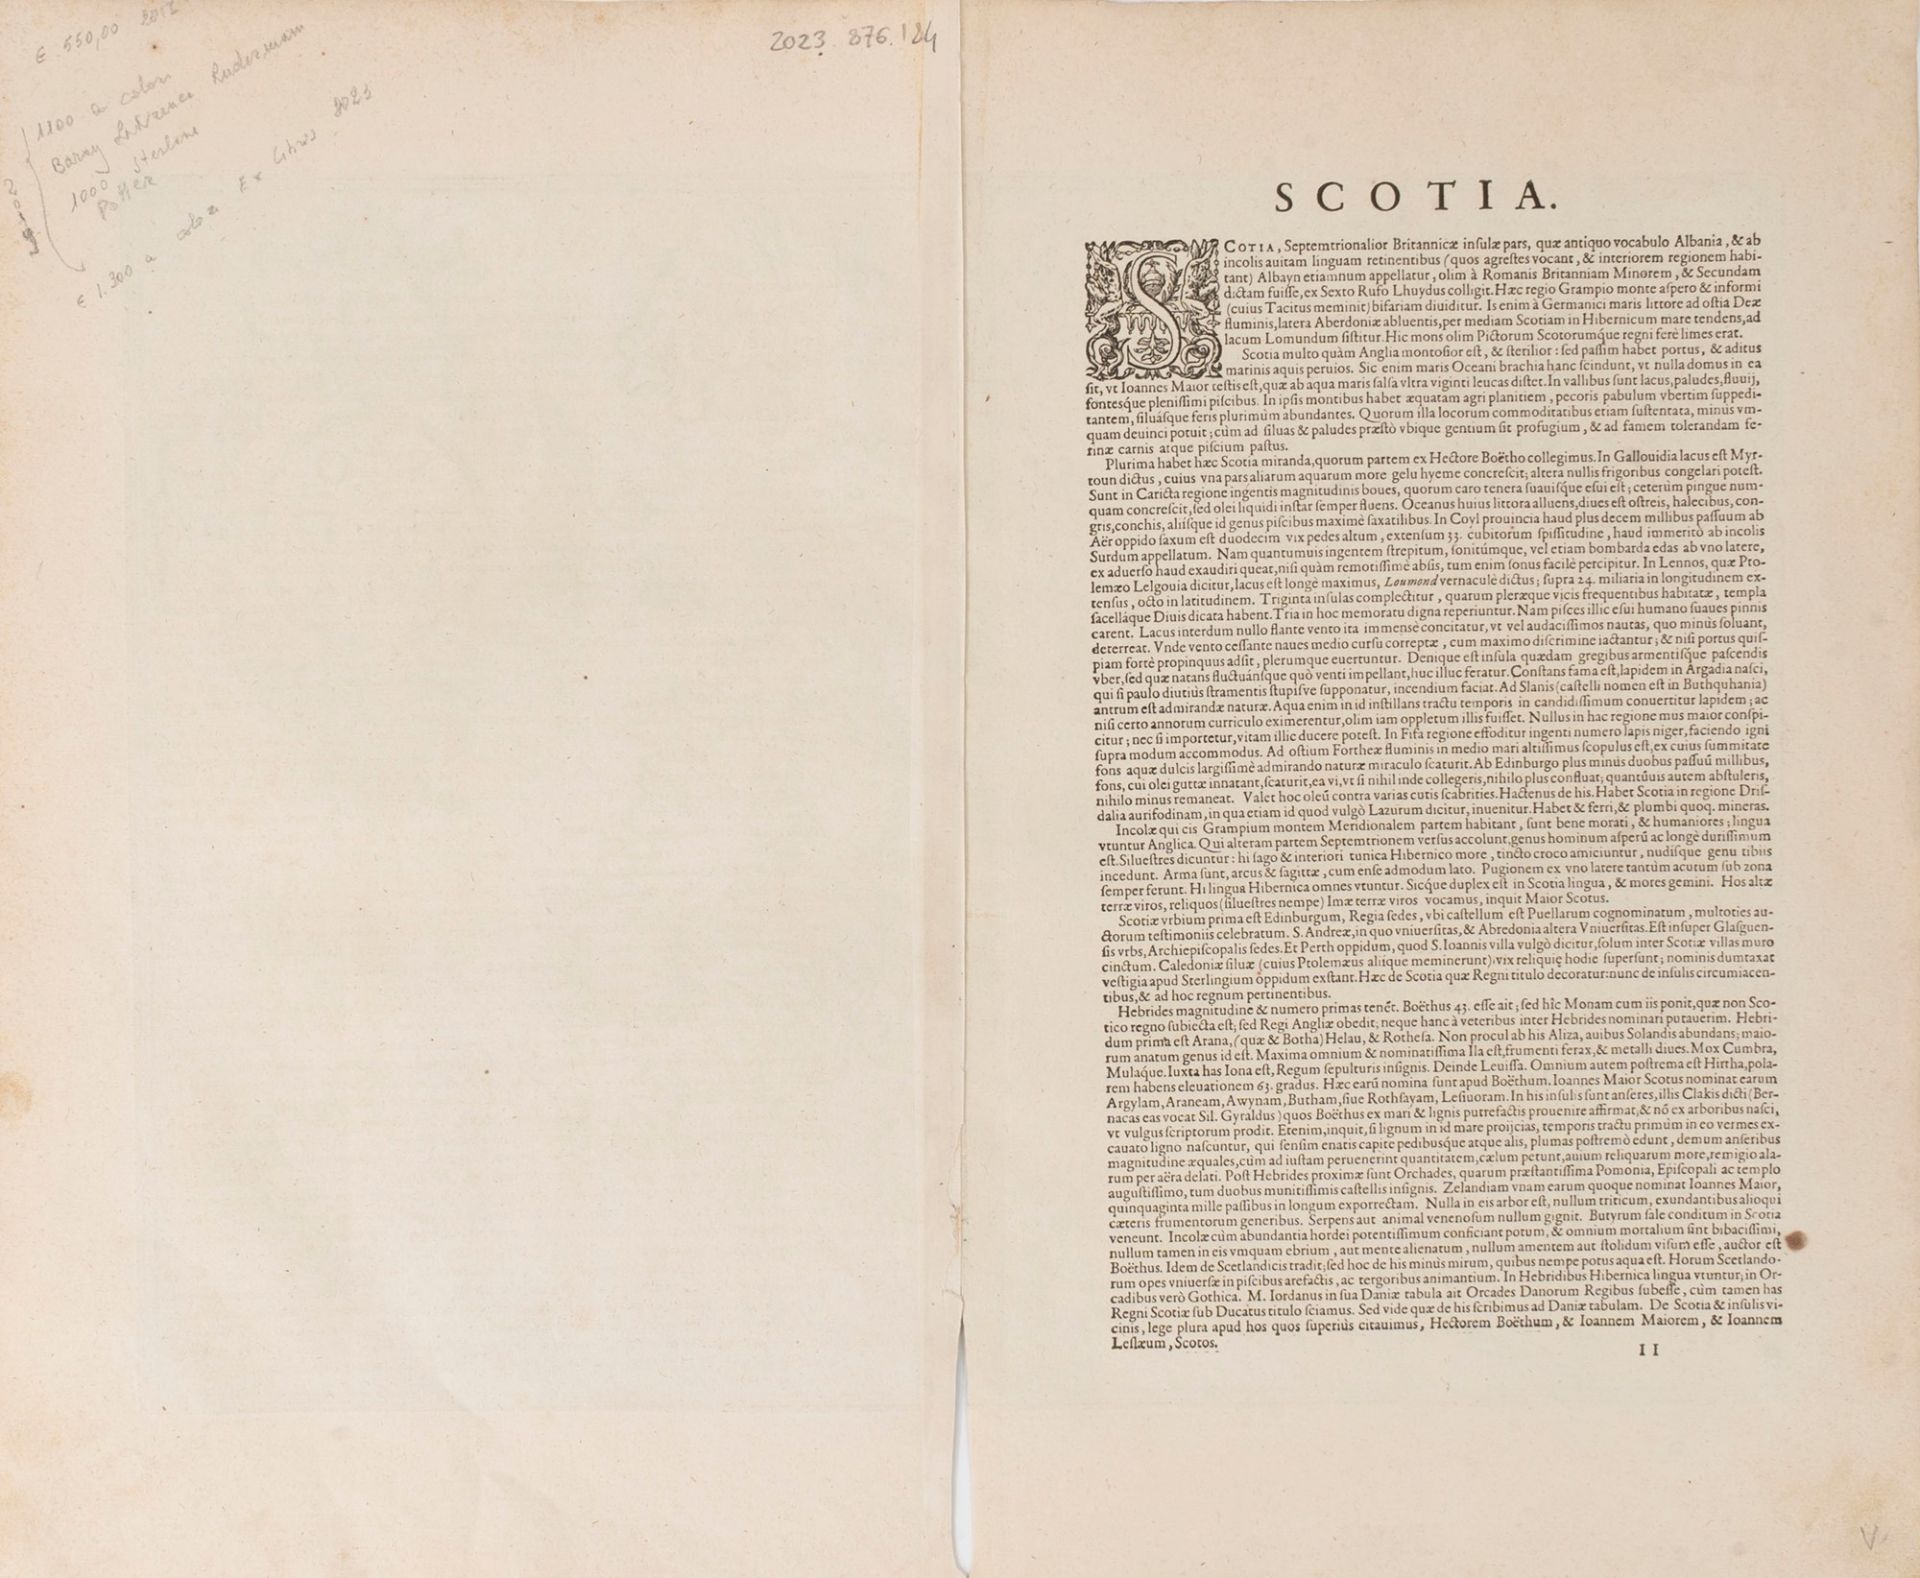 Scotland - Ortelio, Abramo - Scotiae Tabula - Image 2 of 2